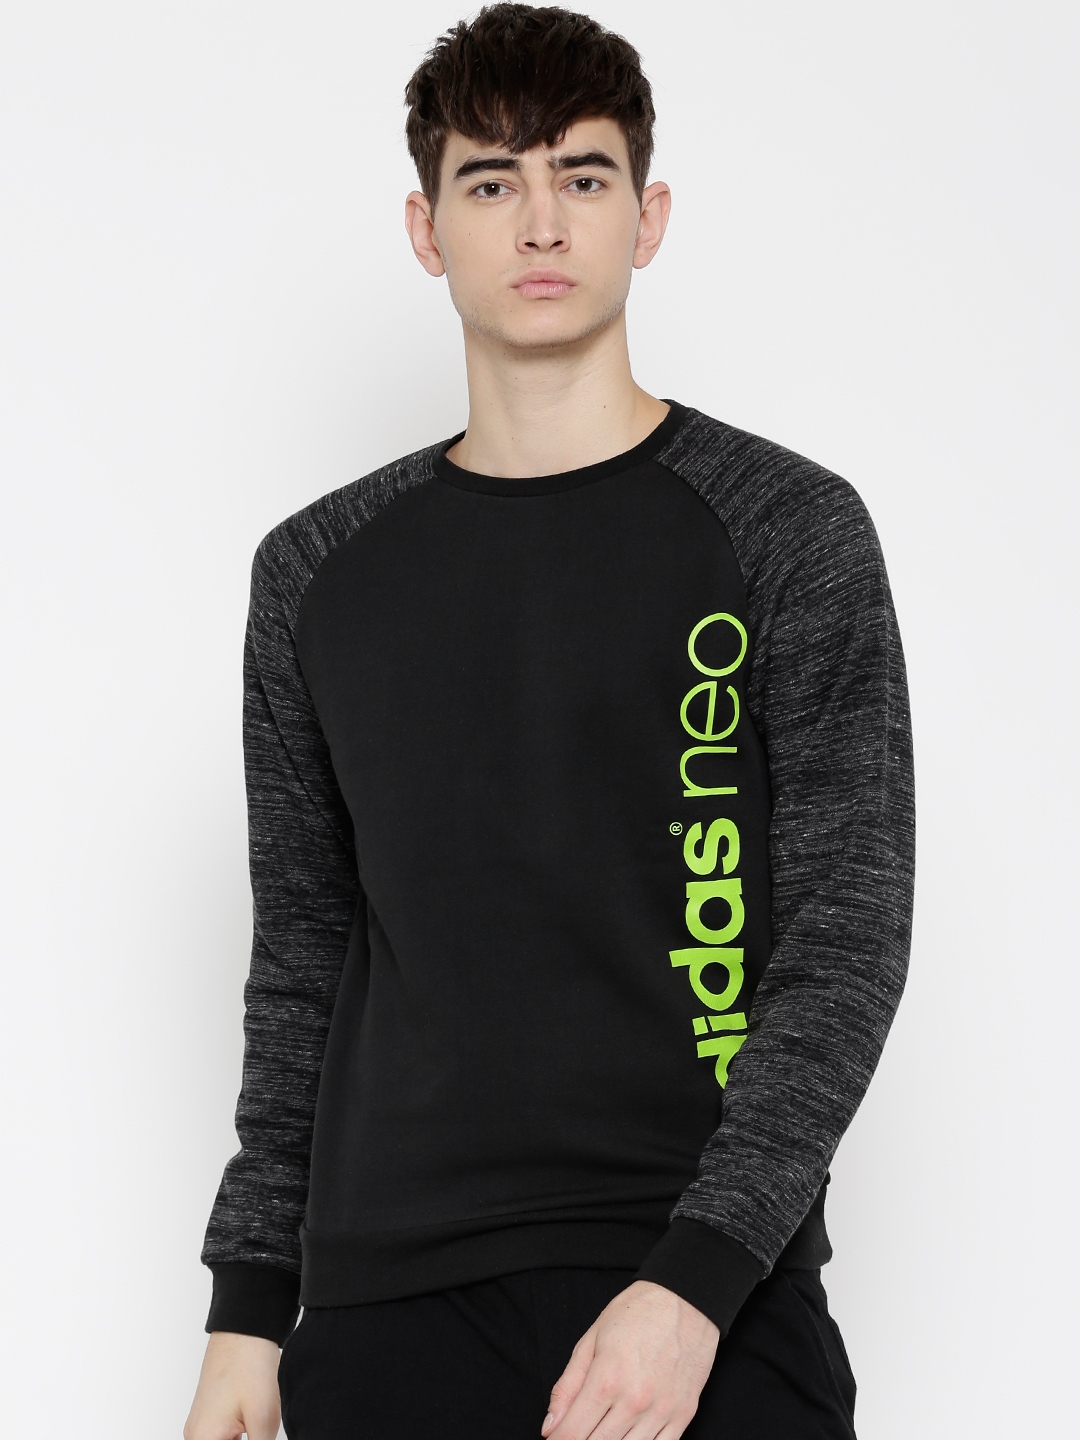 Buy ADIDAS NEO Black CE CR Printed Sweatshirt - Sweatshirts for Men